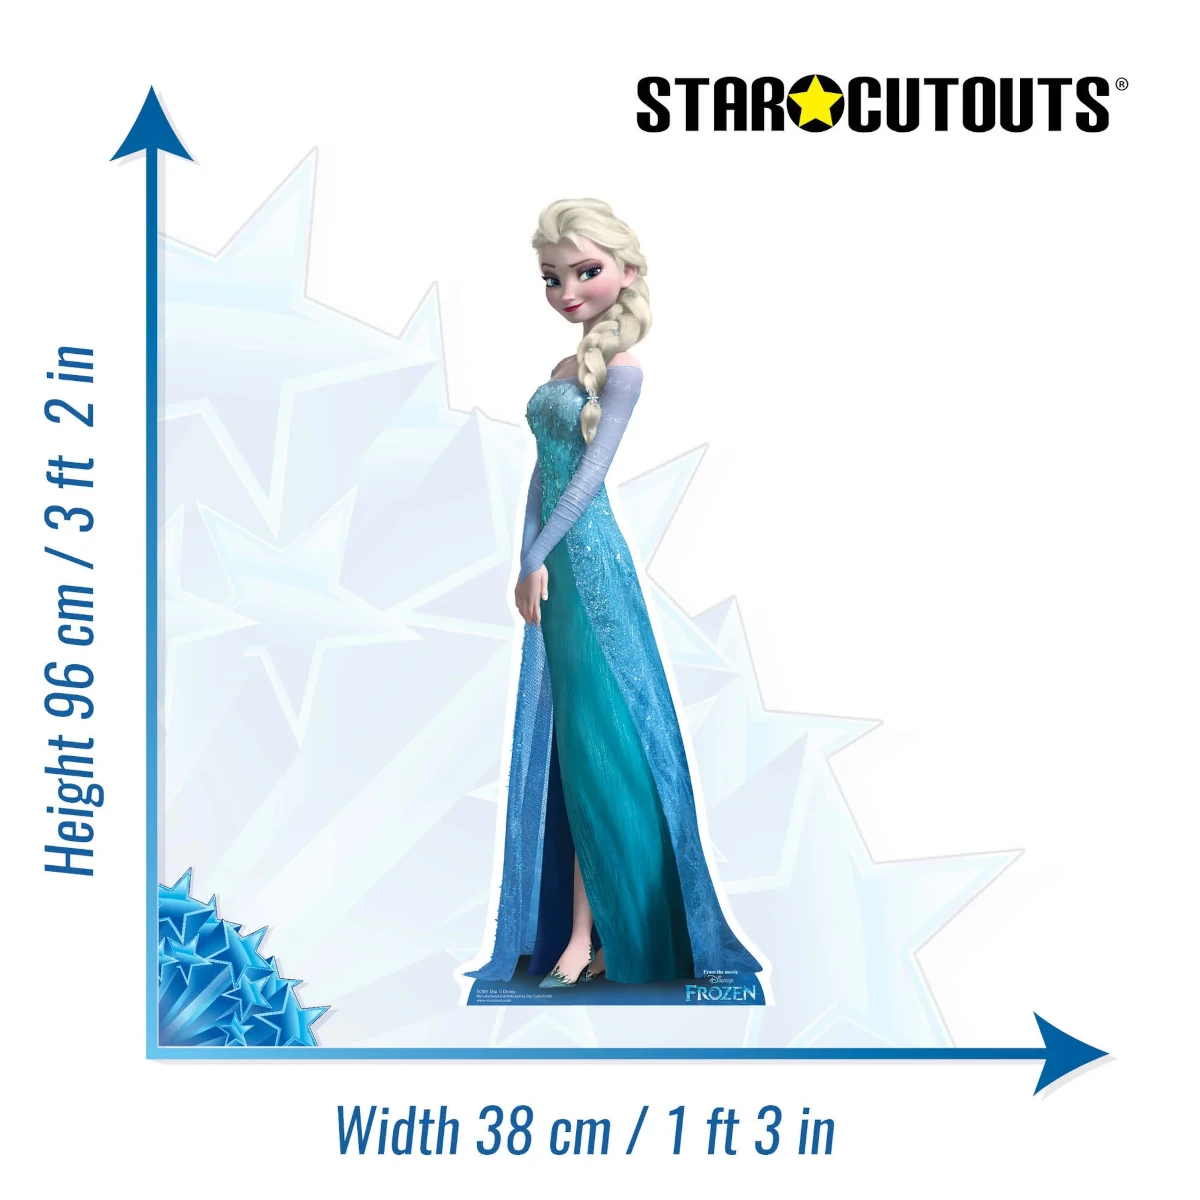 SC901 Elsa (Disney Frozen) Official Mini Cardboard Cutout Standee Size